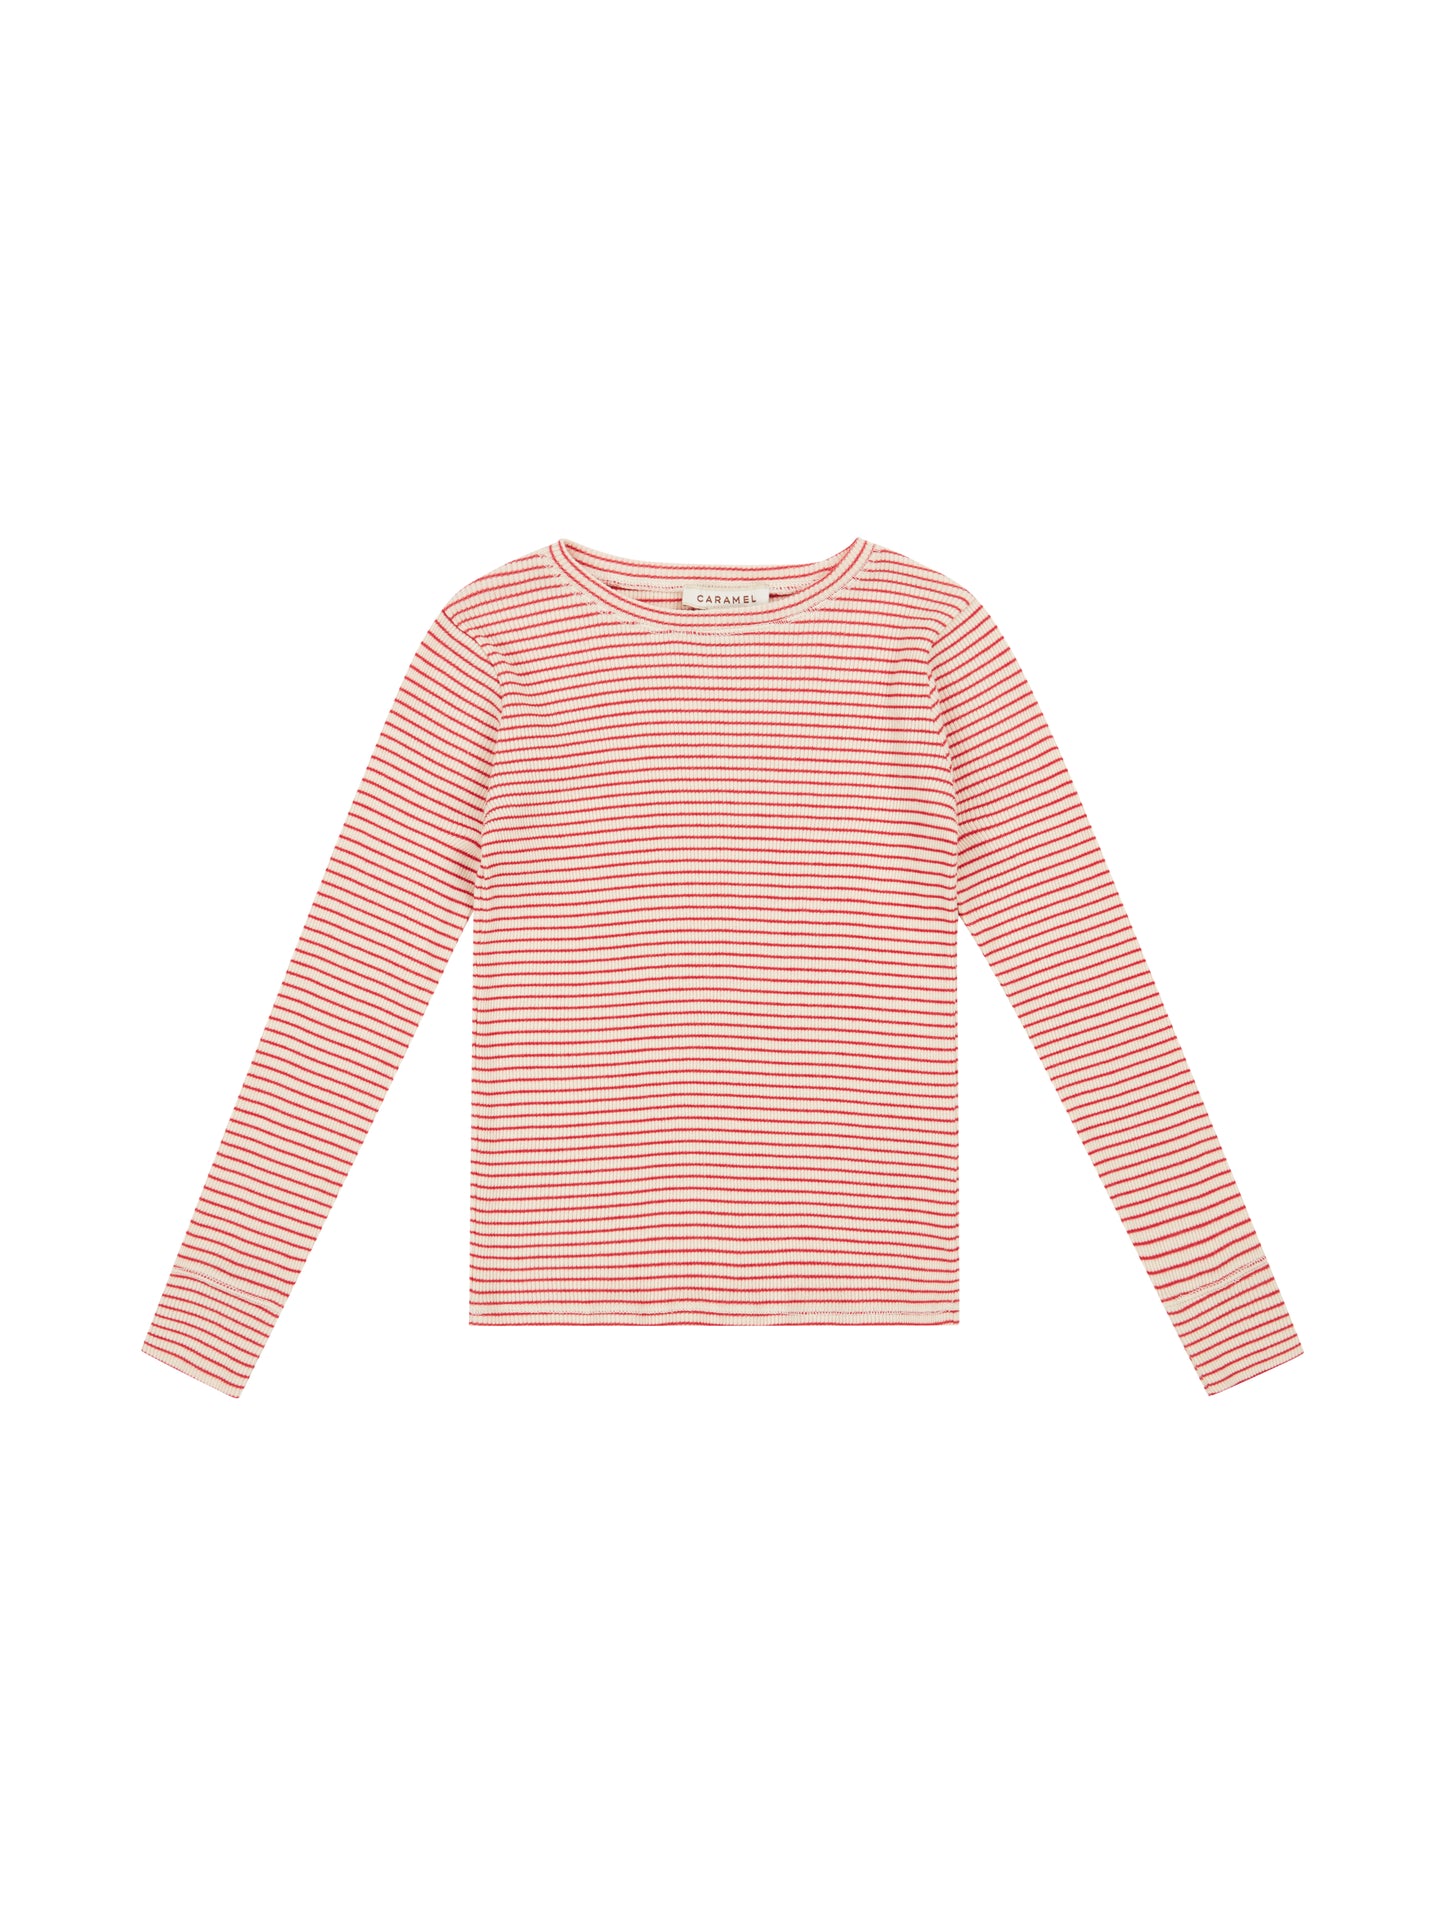 Caramel - Kishon T-shirt - Redcurrant/Cream stripe